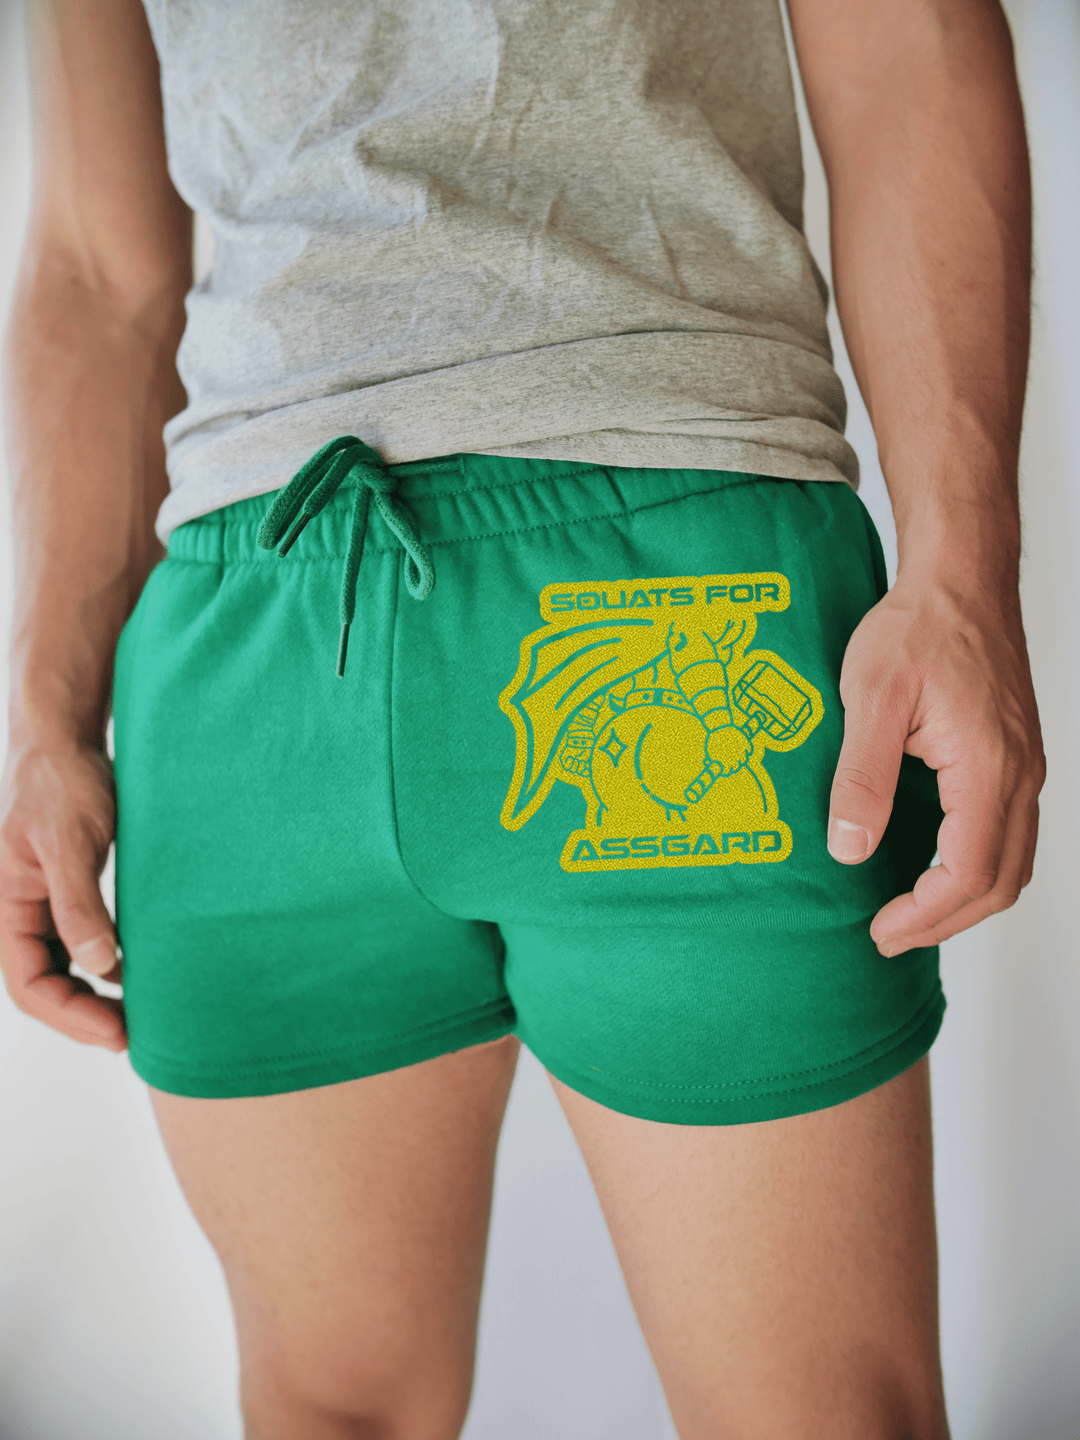 PixelThat Punderwear Shorts Kelly Green / S / Front Squats For ASSgard Men's Gym Shorts